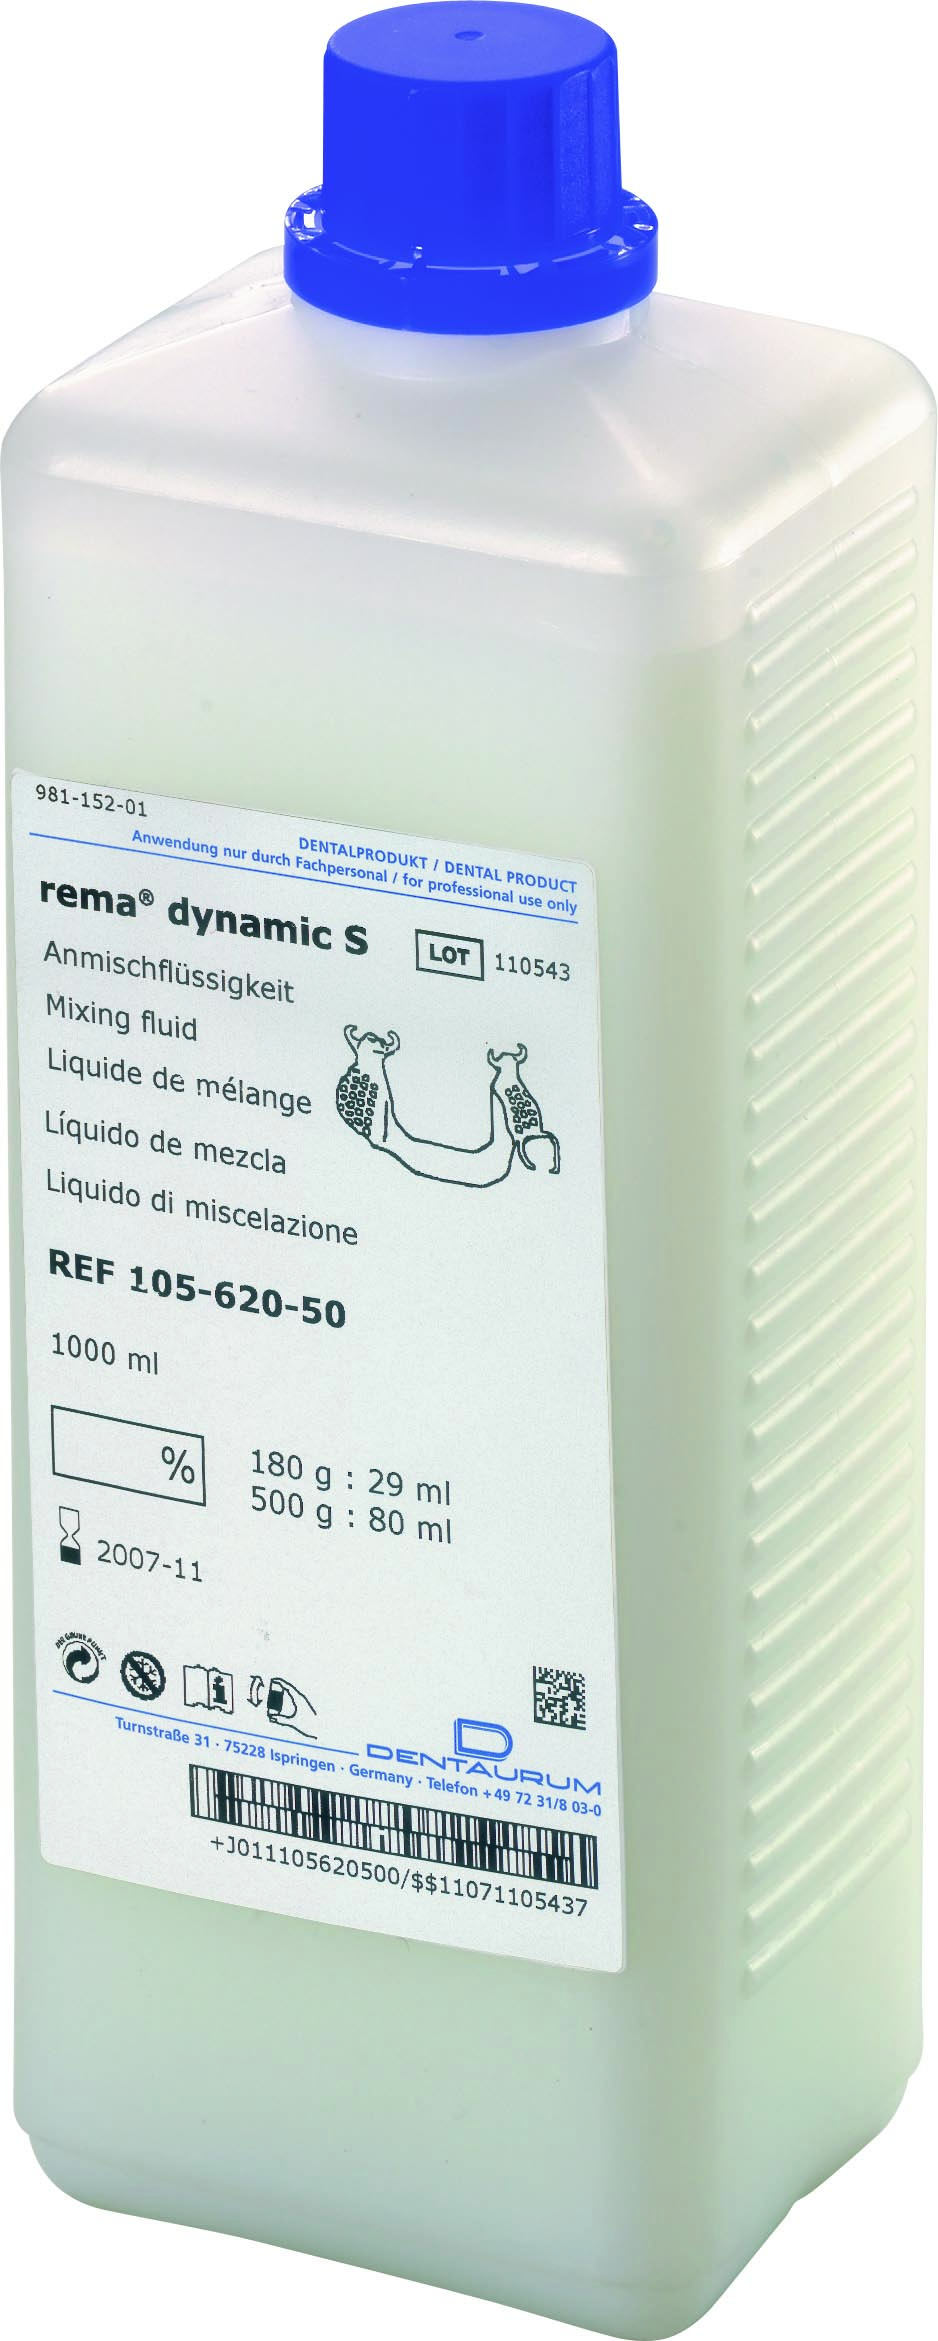 105-620-50   rema dynamic S, 1